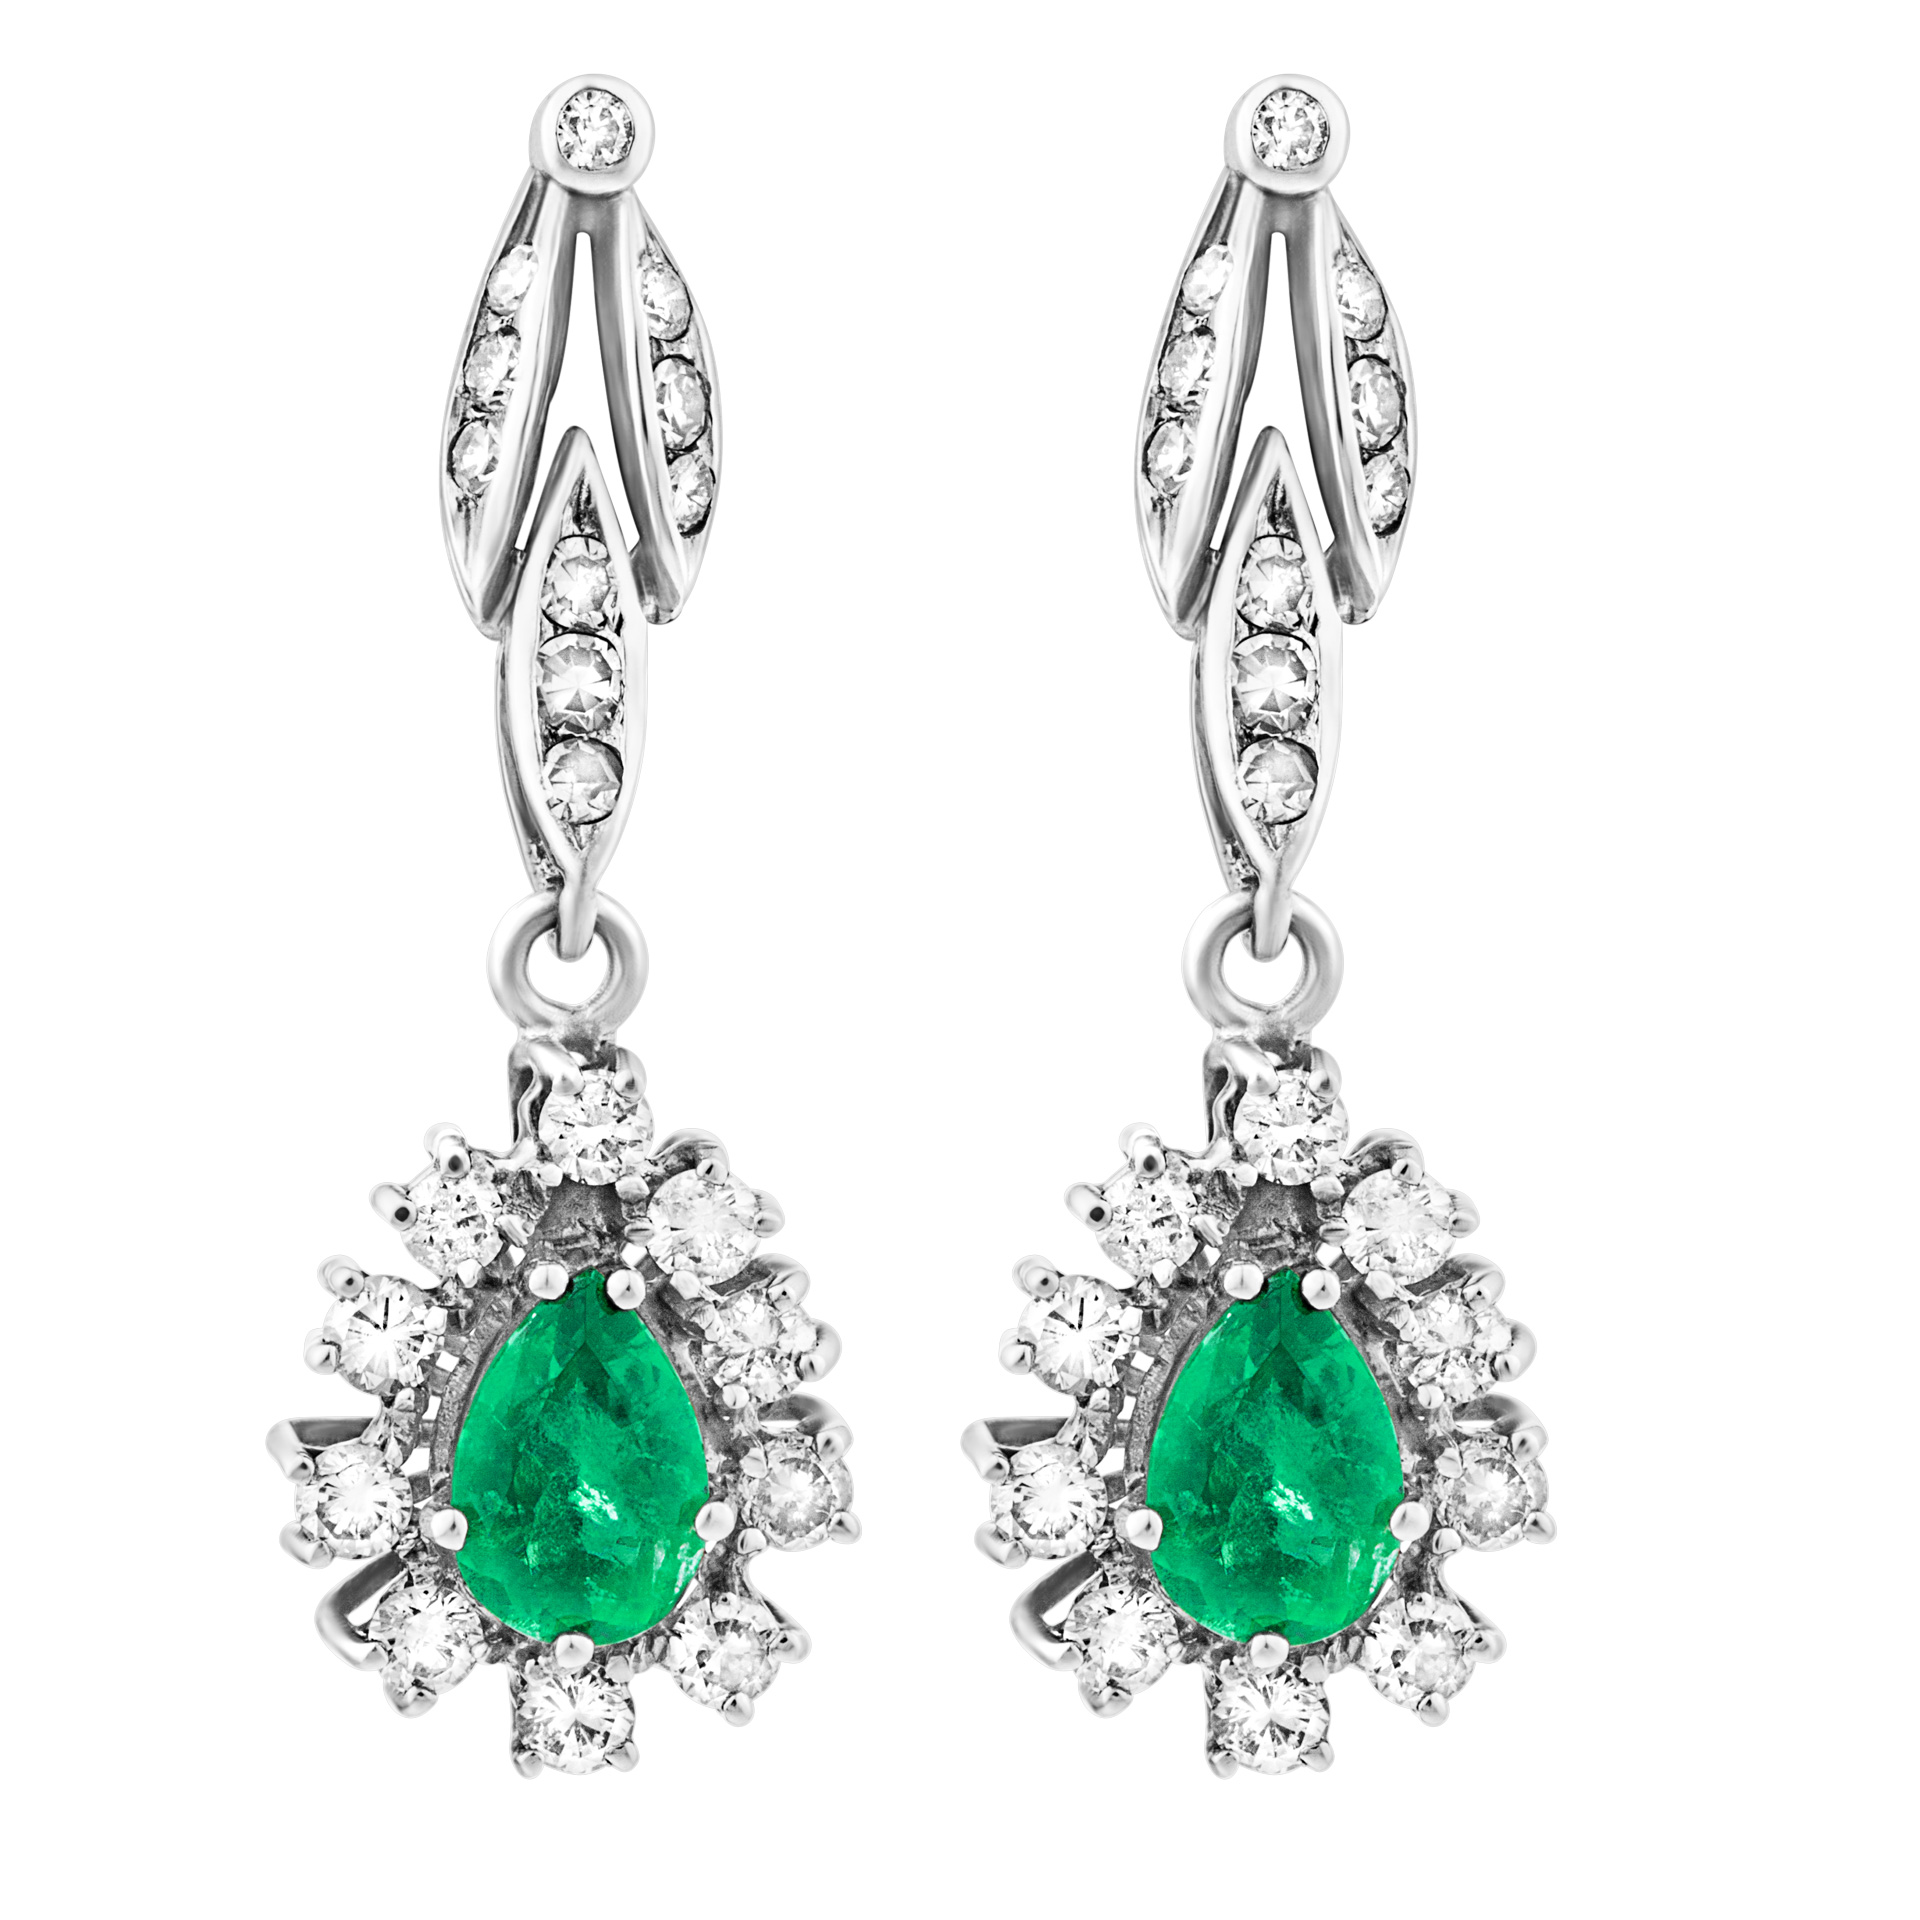 18k white gold dangling tear drop emerald earrings ctw appr. 2 carats with app. 1 carat in diamonds image 1